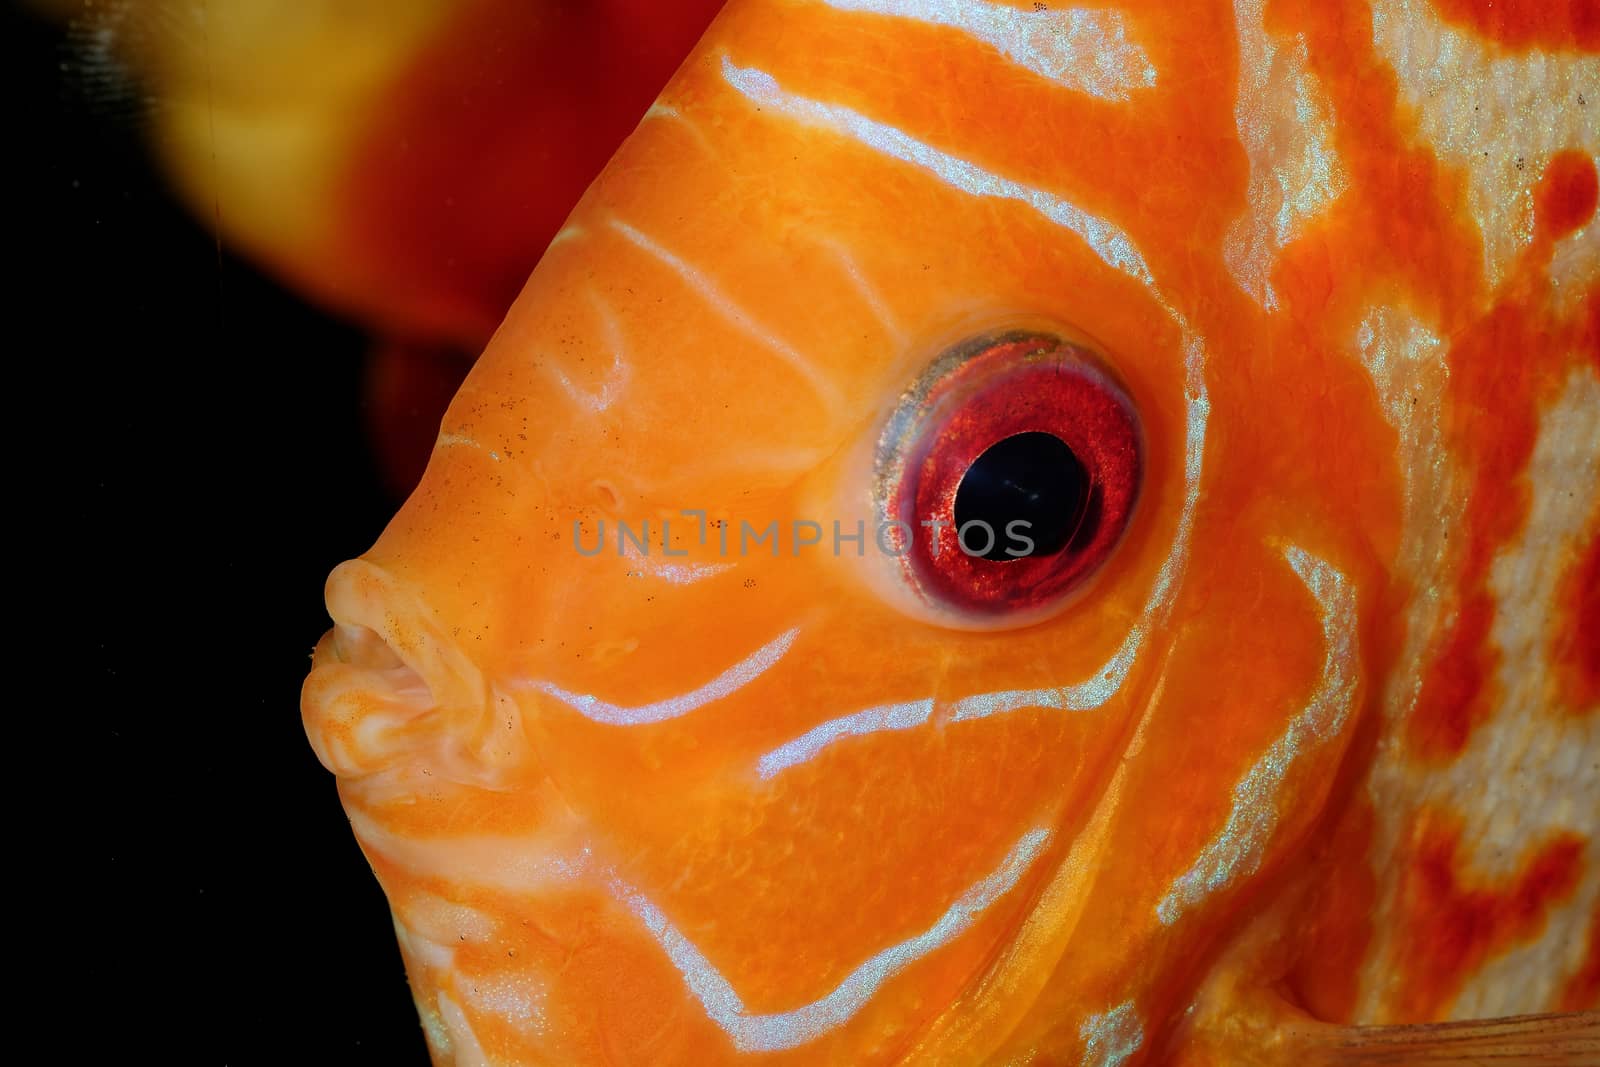 Very nice portrait of orange discu fish.